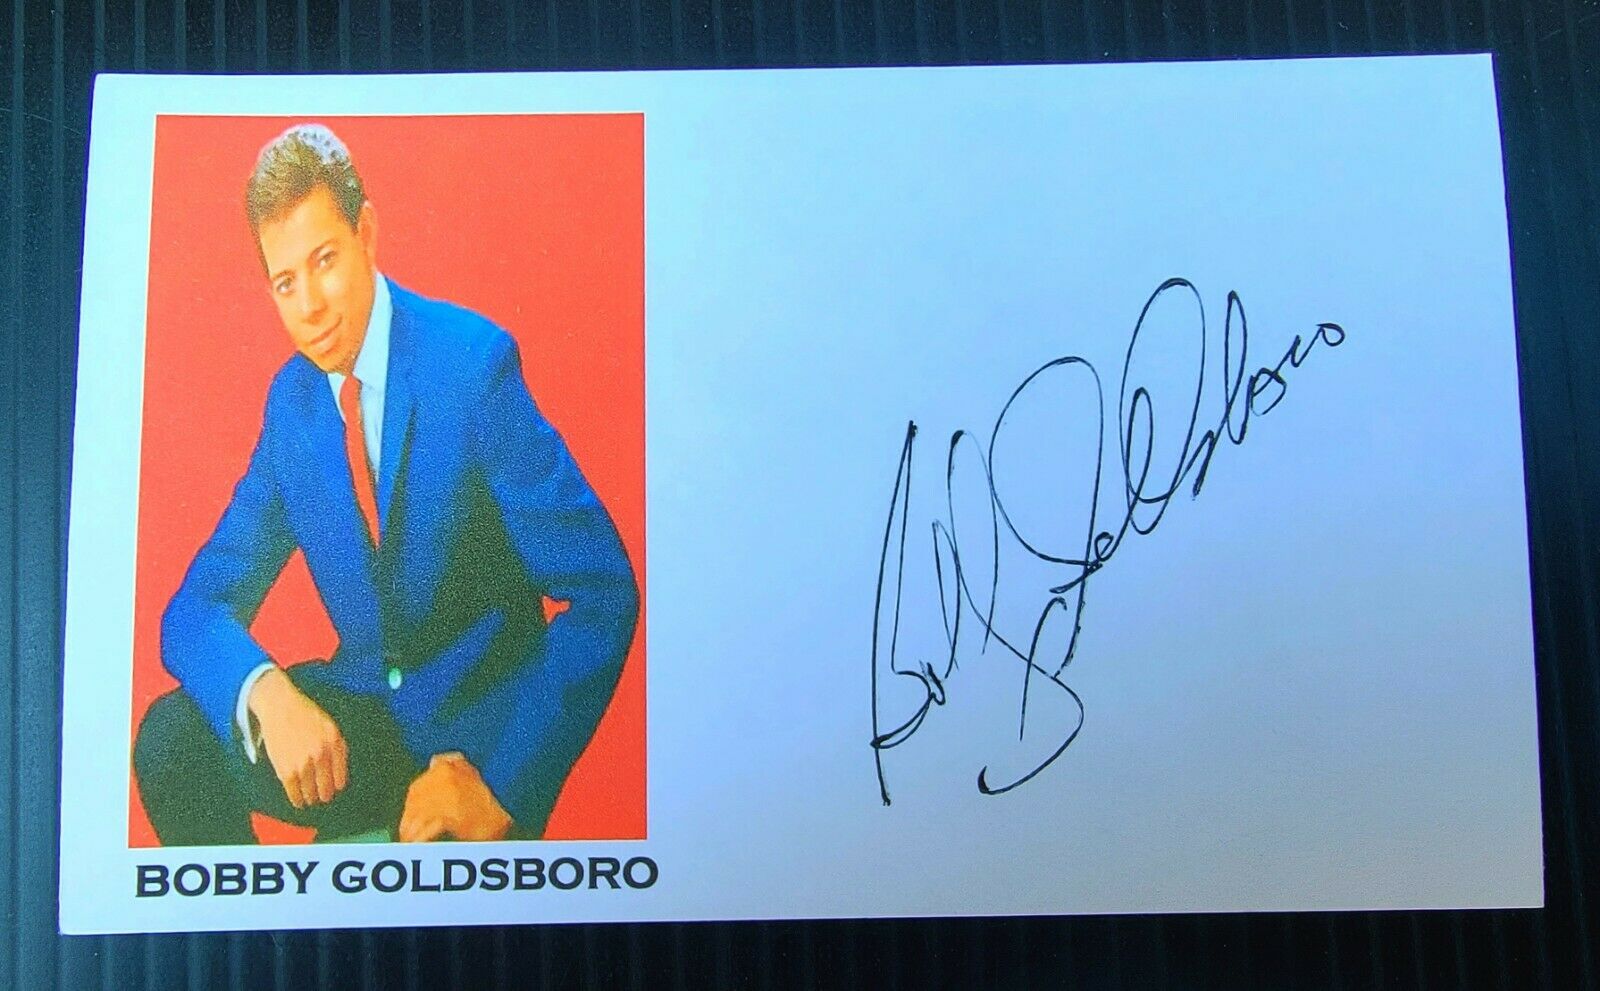 Bobby Goldsboro "honey" Autographed 3x5 Index Card